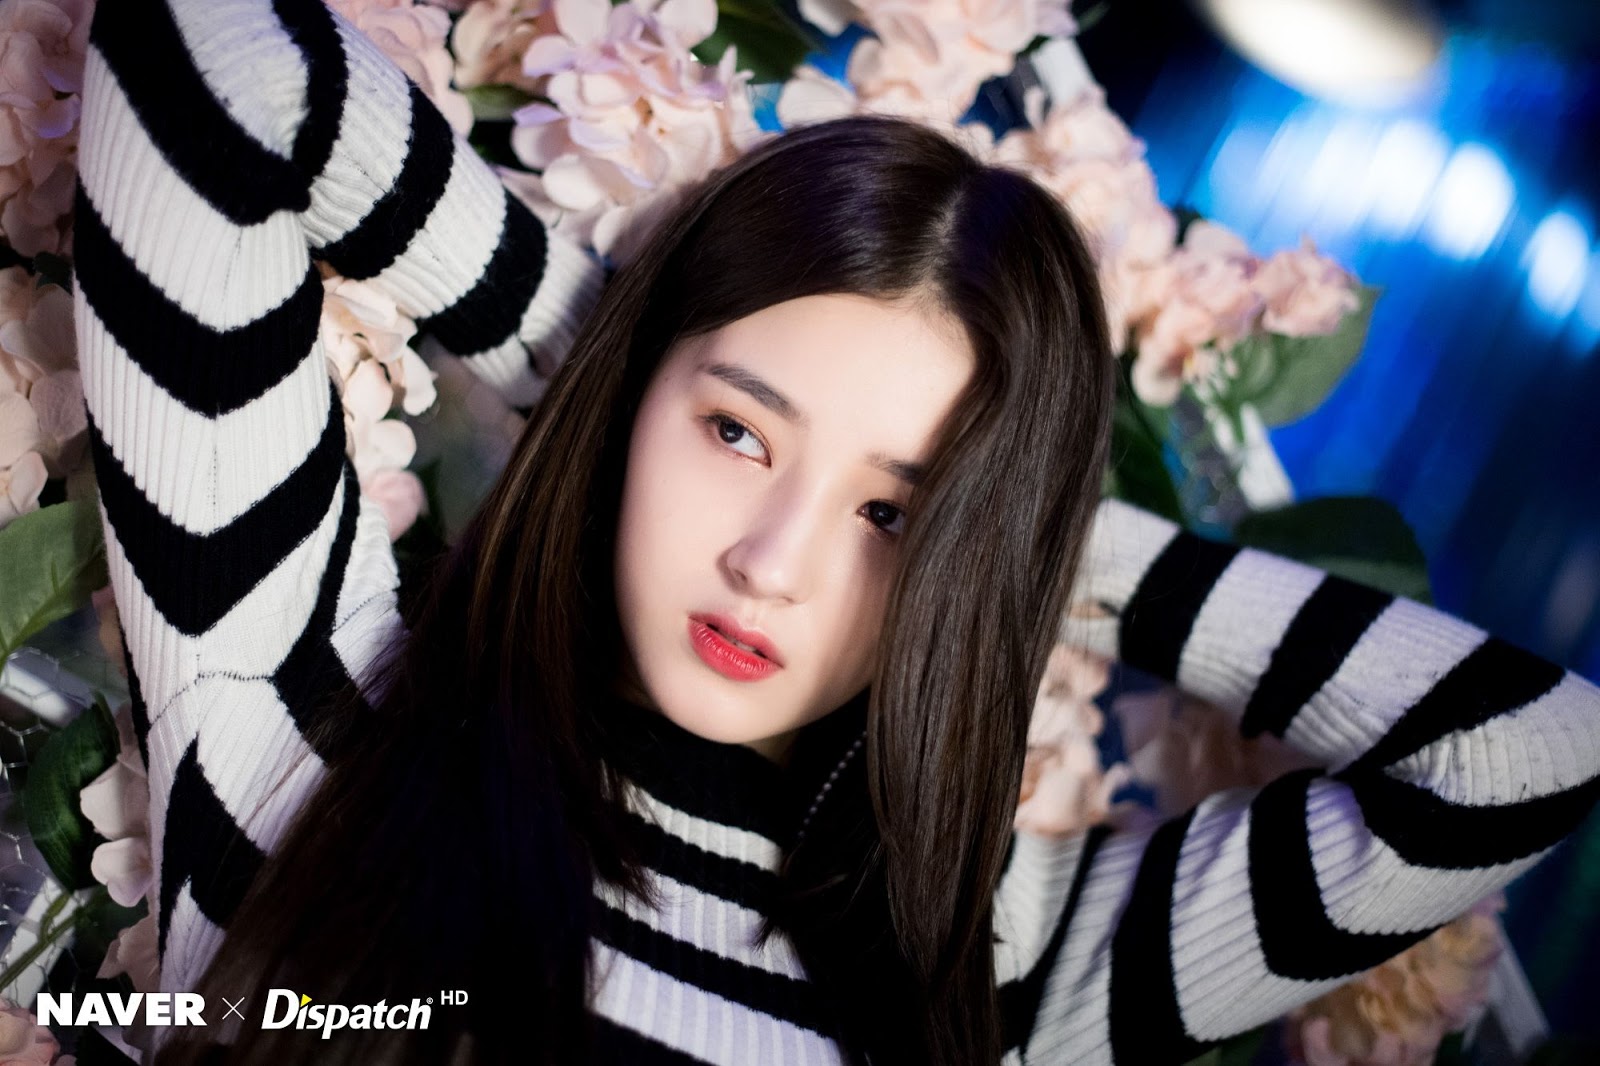 MOMOLAND Nancy - Naver x Dispatch Dancer photoshoot - Who's your bias?